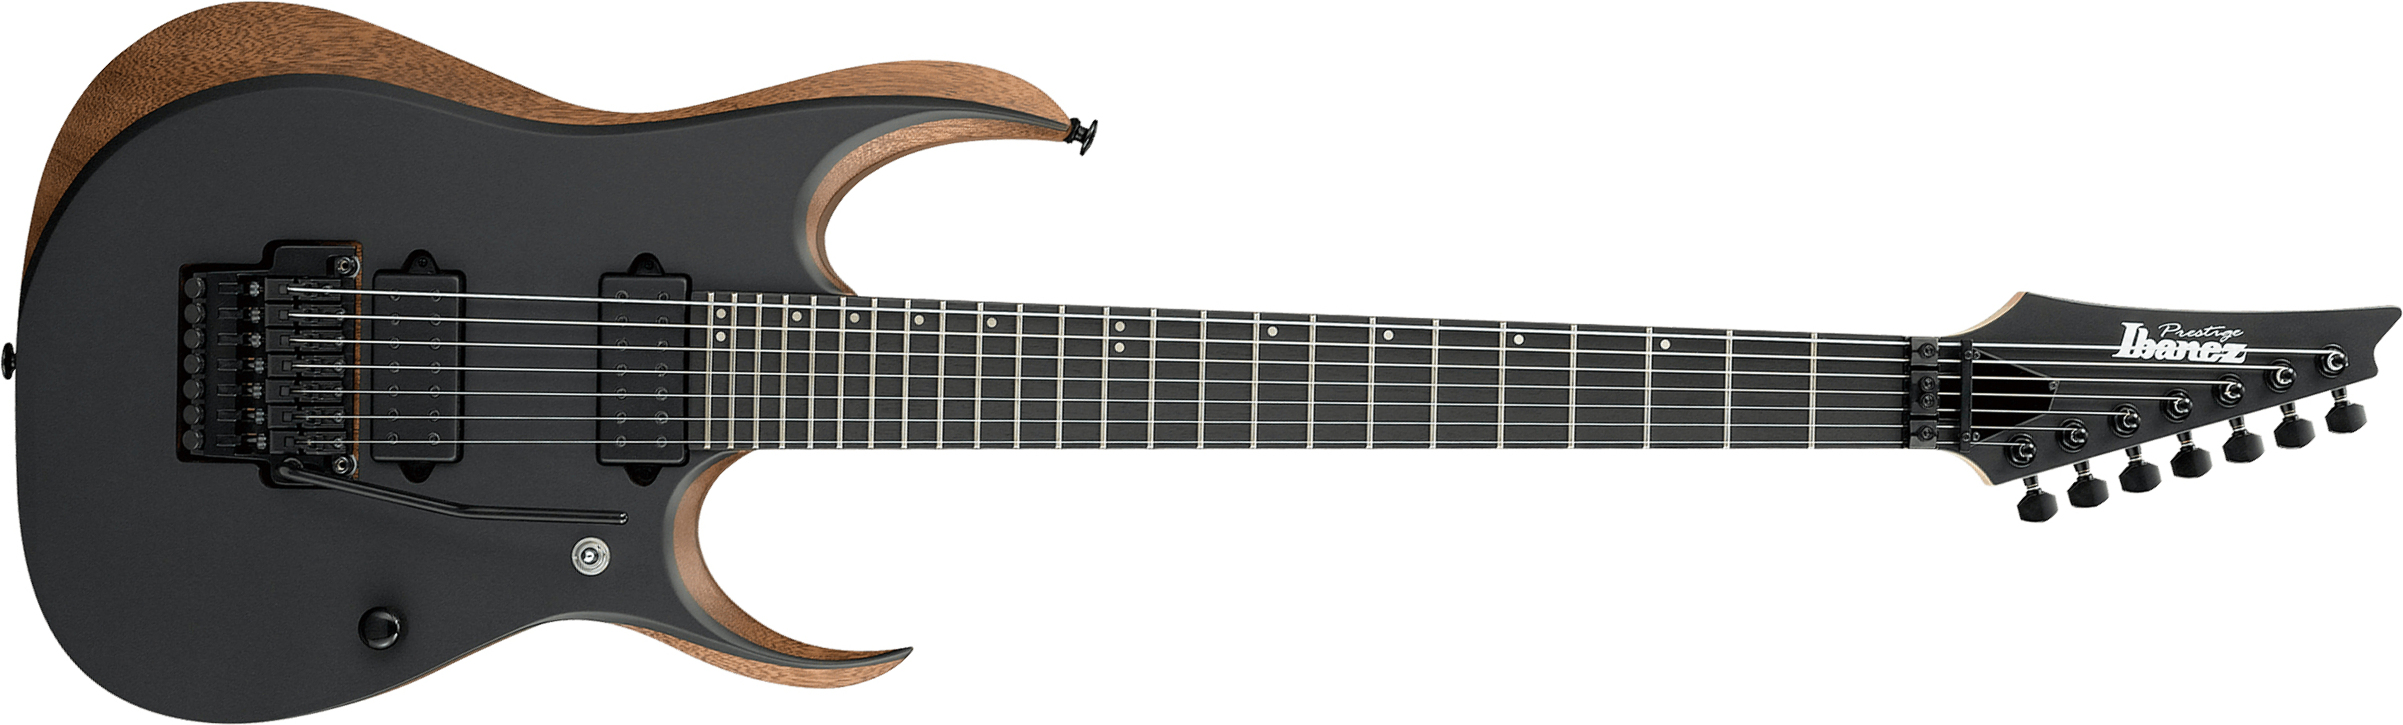 Ibanez Rgdr4327 Ntf Prestige Jap Hh Dimarzio Fr Eb - Natural Flat - 7 string electric guitar - Main picture